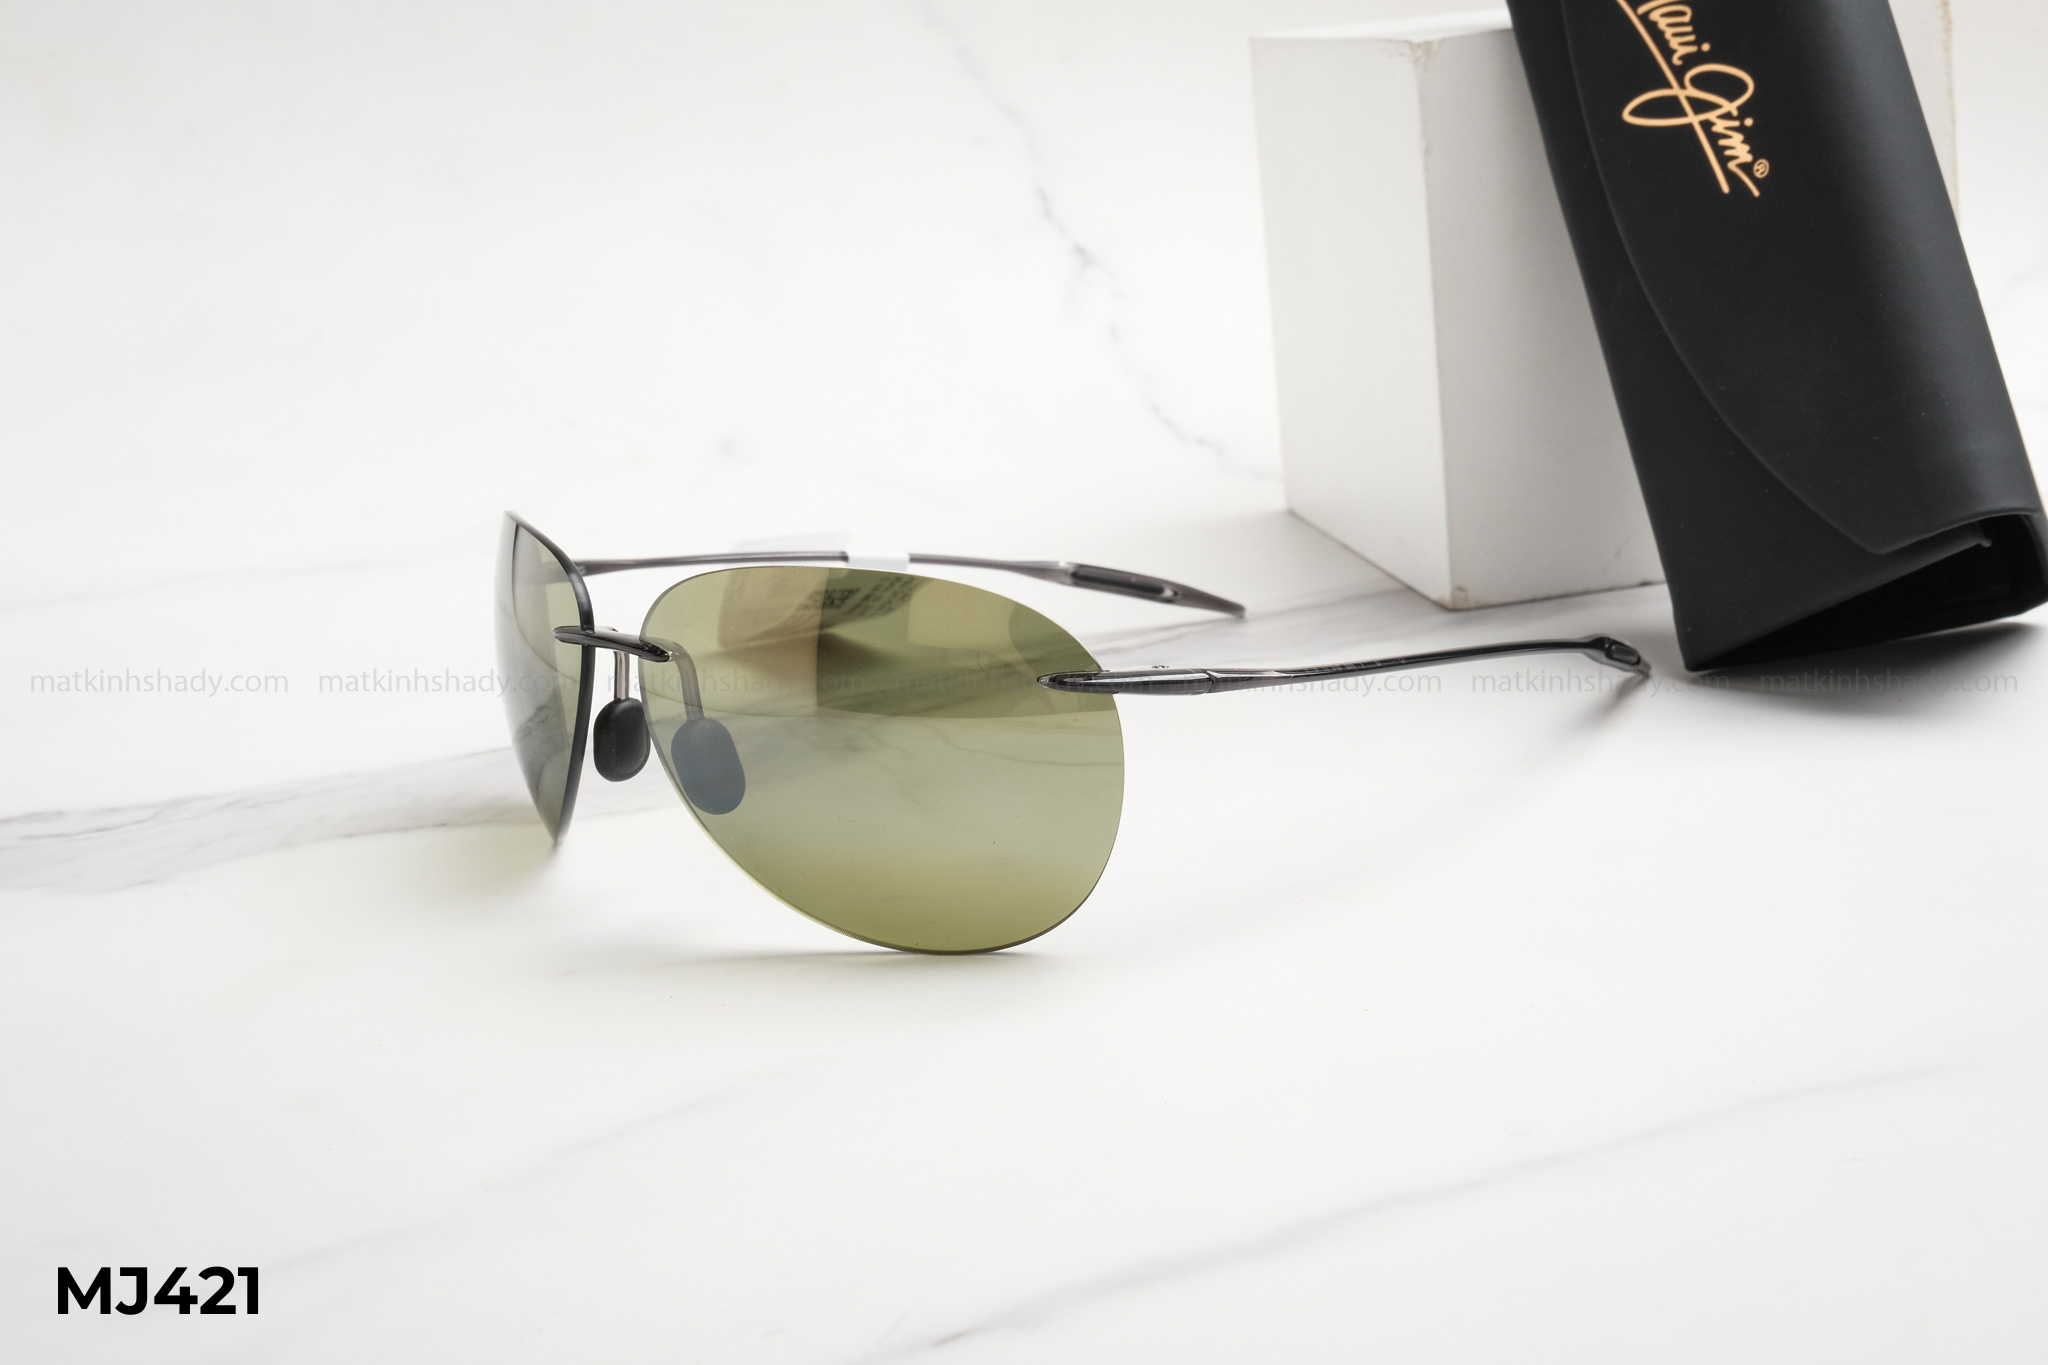  Maui Jim Eyewear - Sunglasses - MJ421 